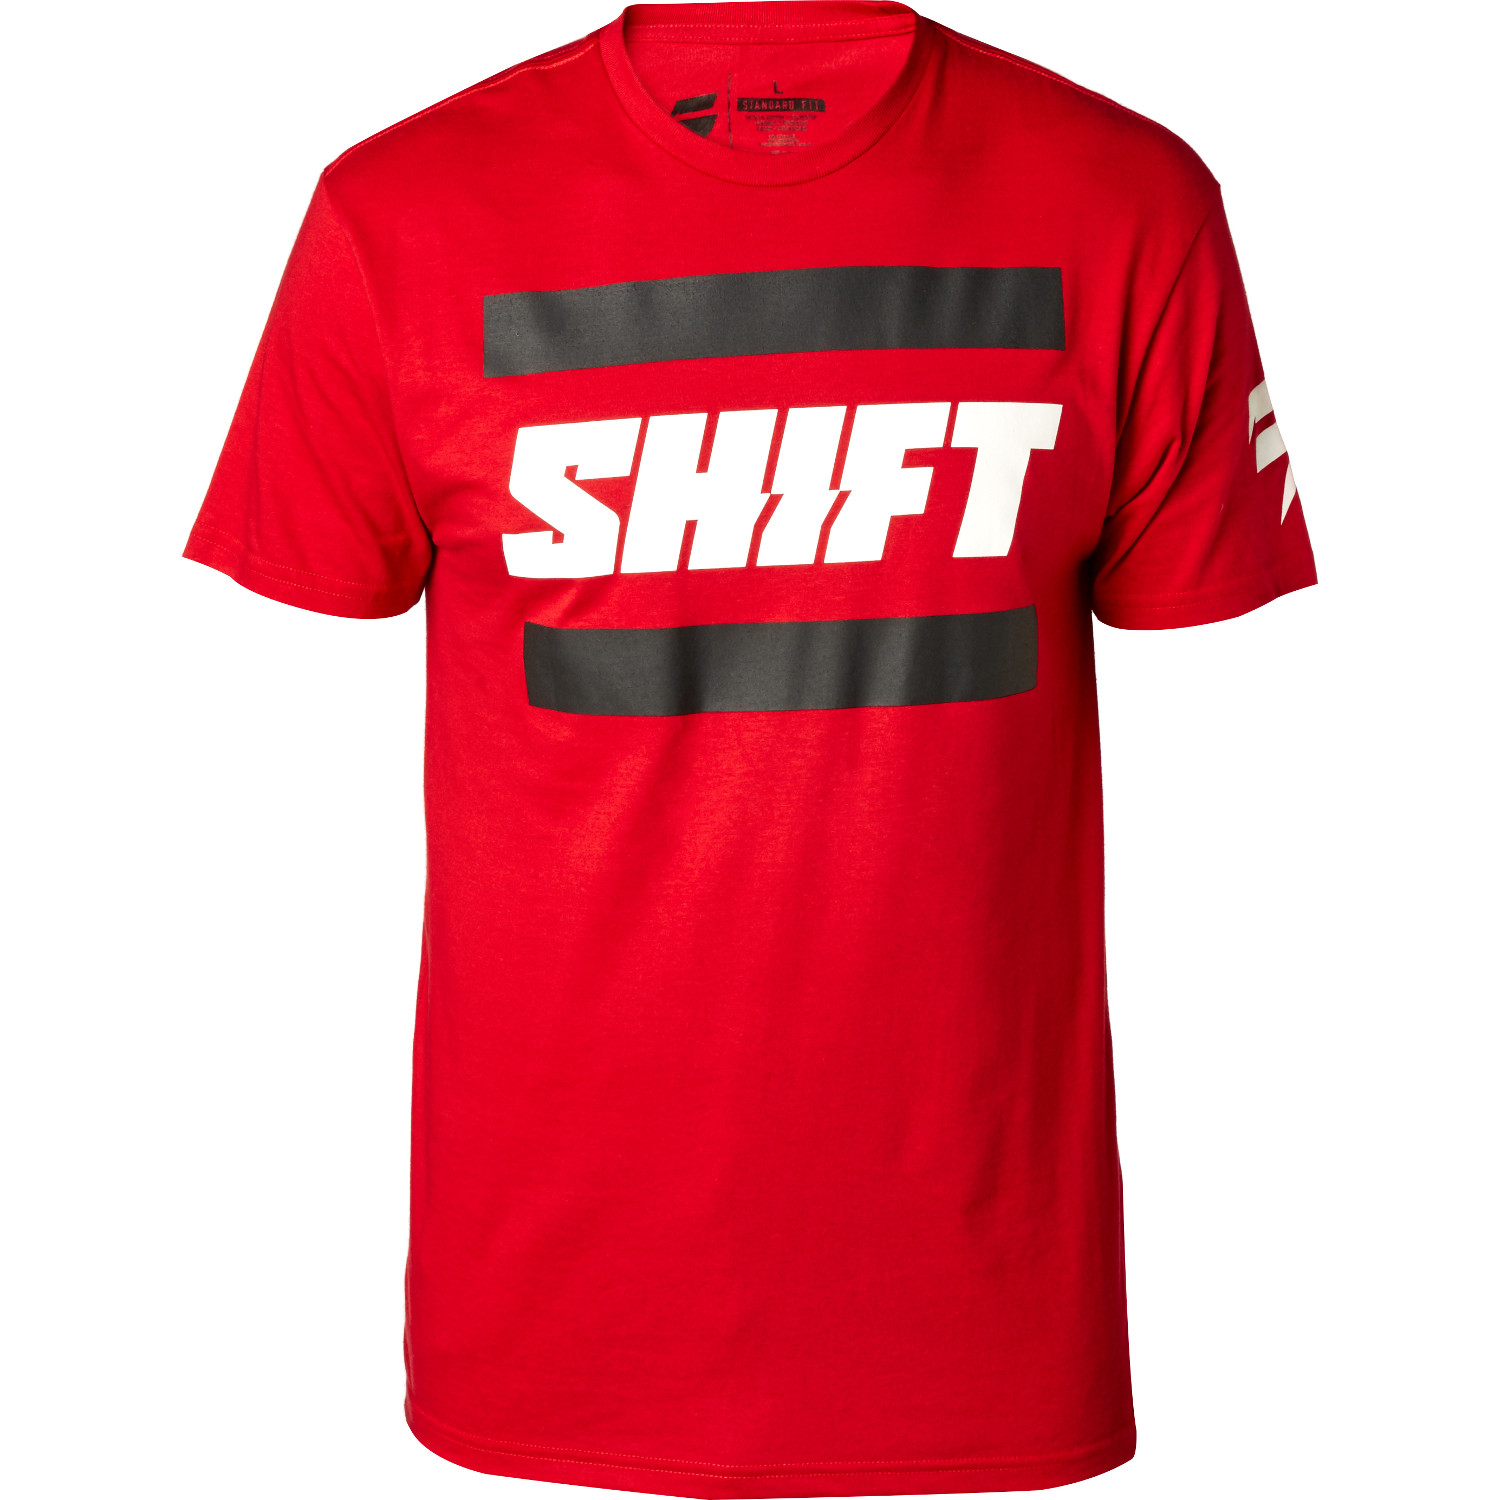 Shift T-Shirt 3lack Label Dunkelrot